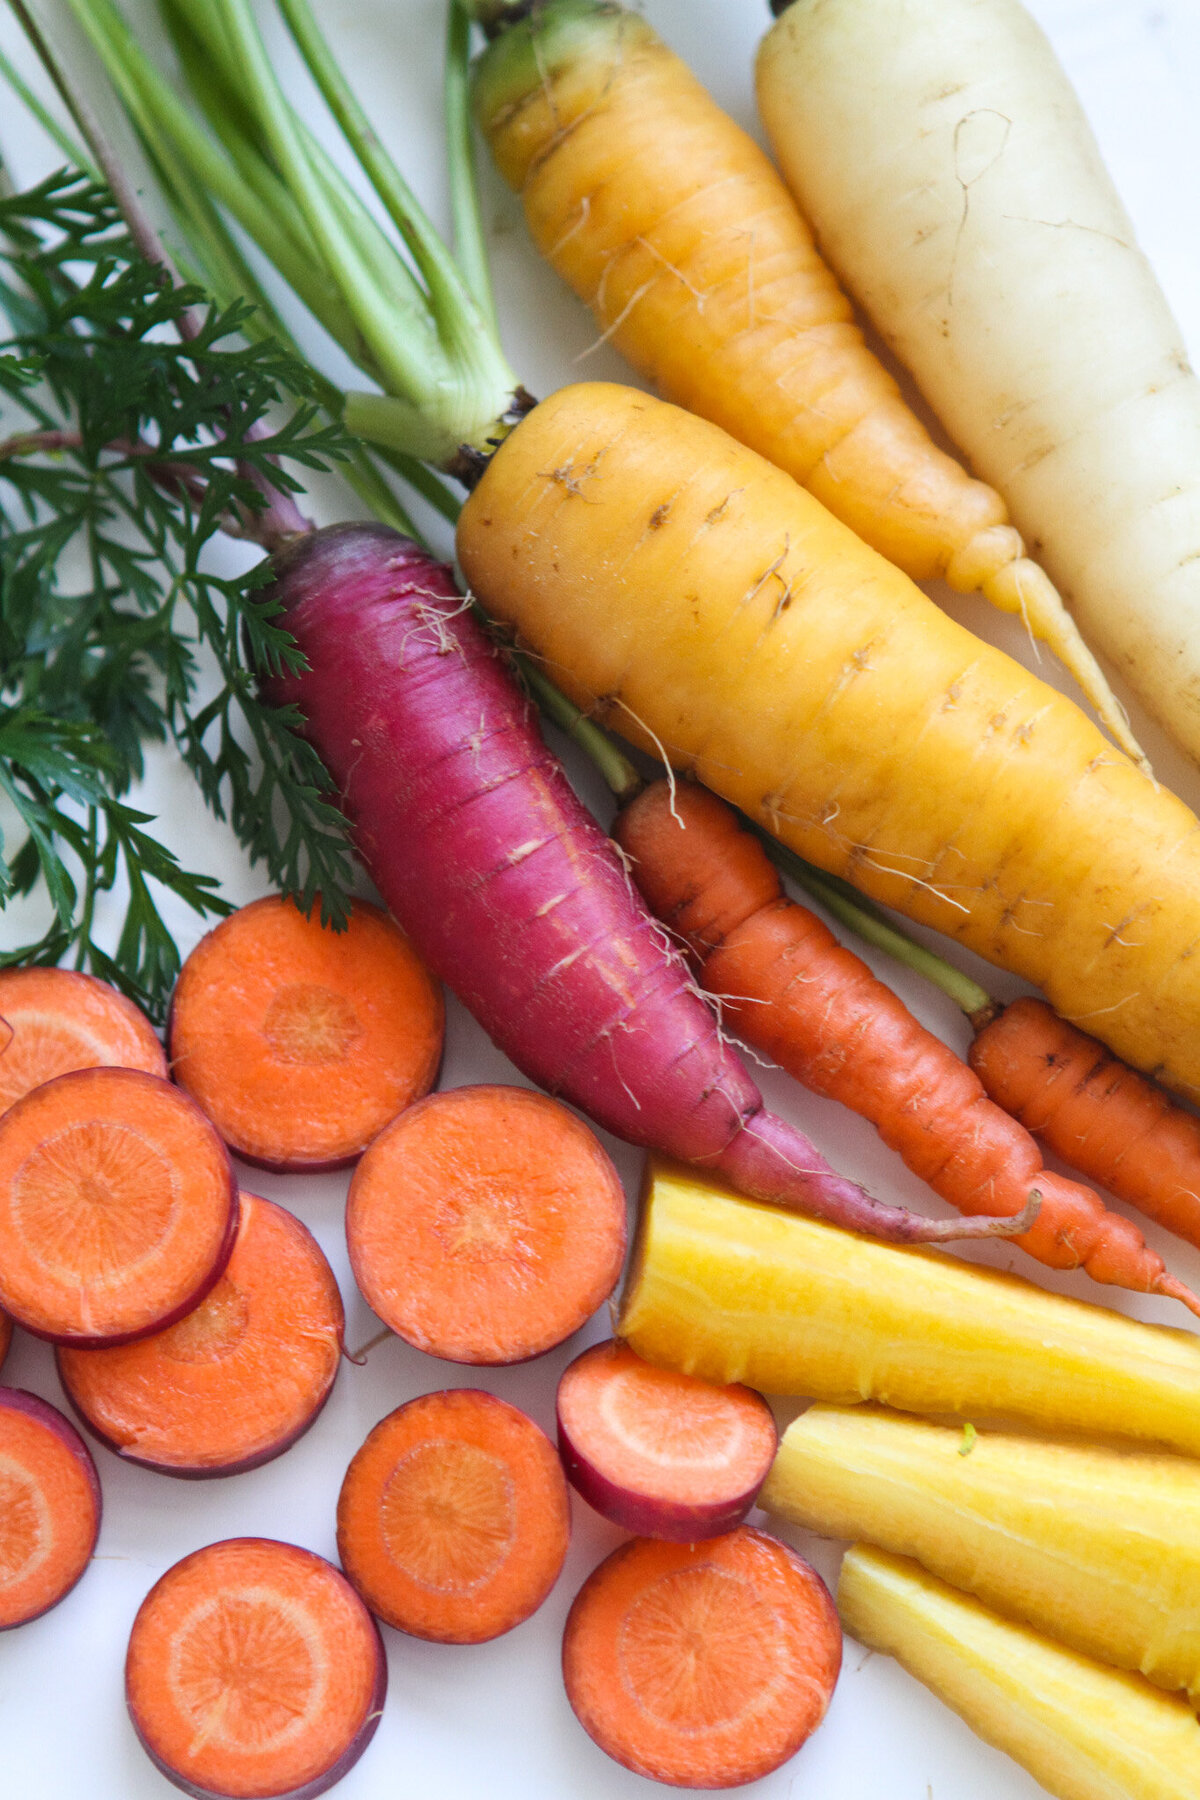 carrots-garden-vegetables